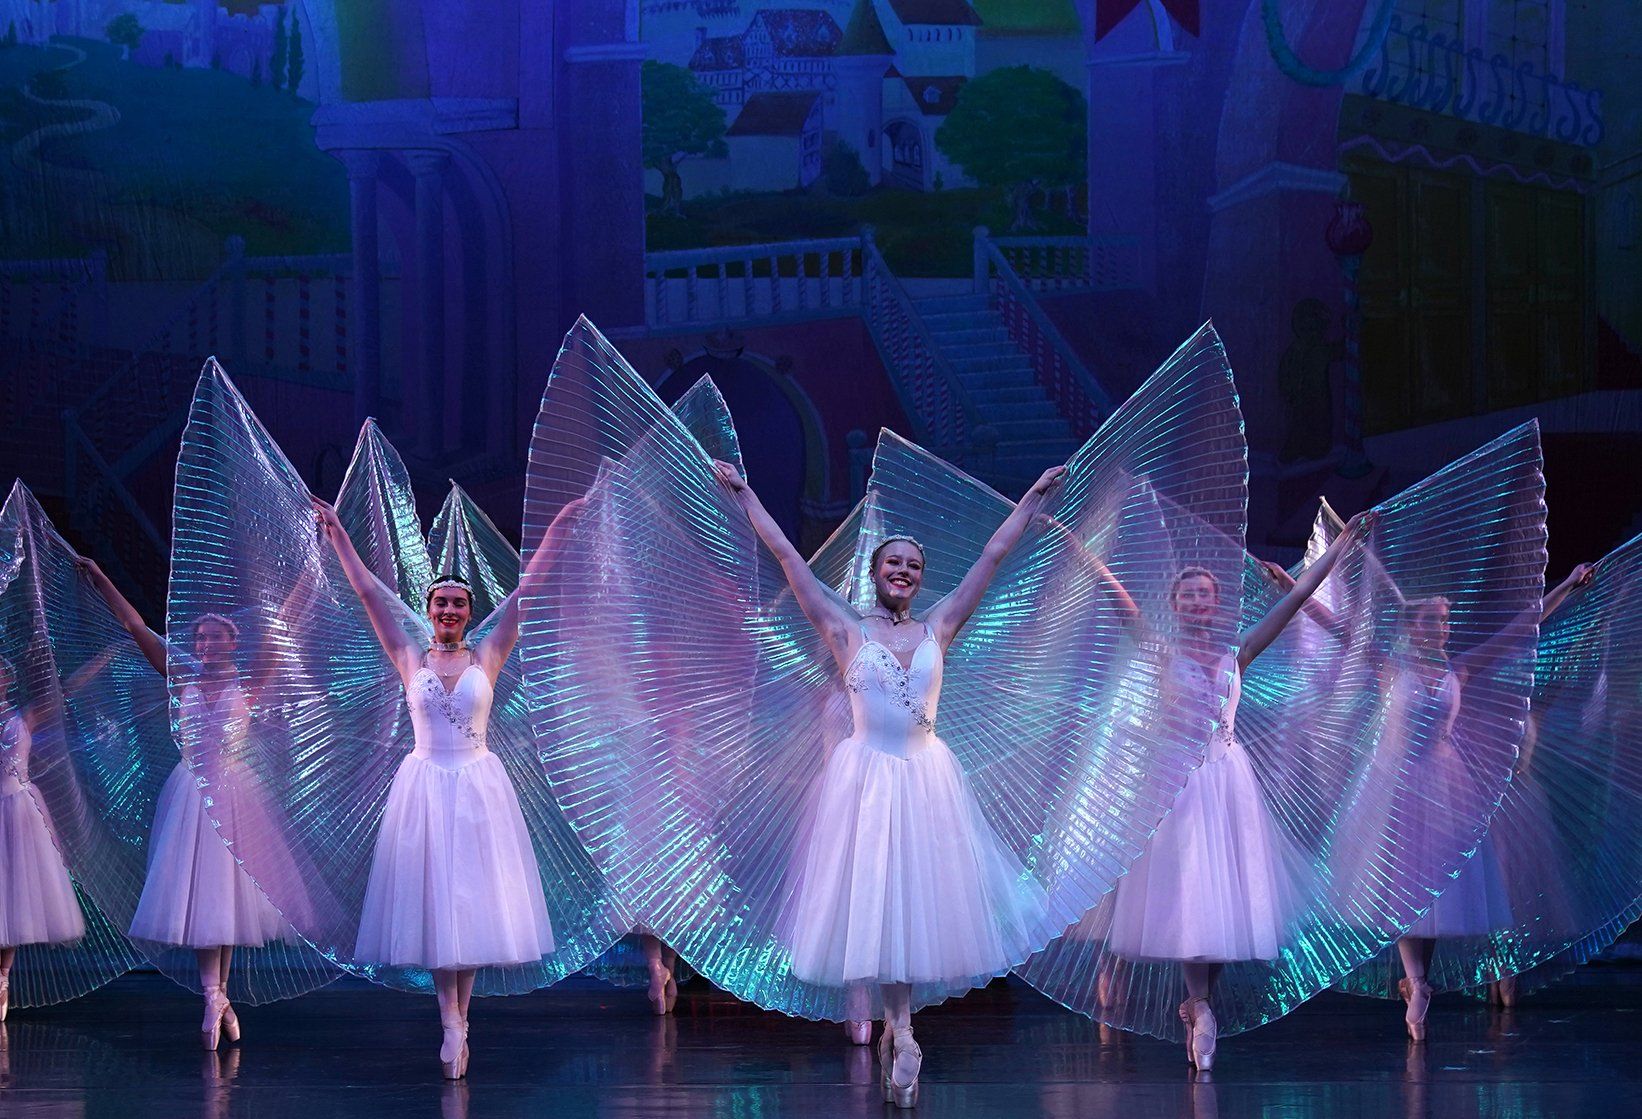 Fairies in the Nutcracker performance by Atlantic City Ballet